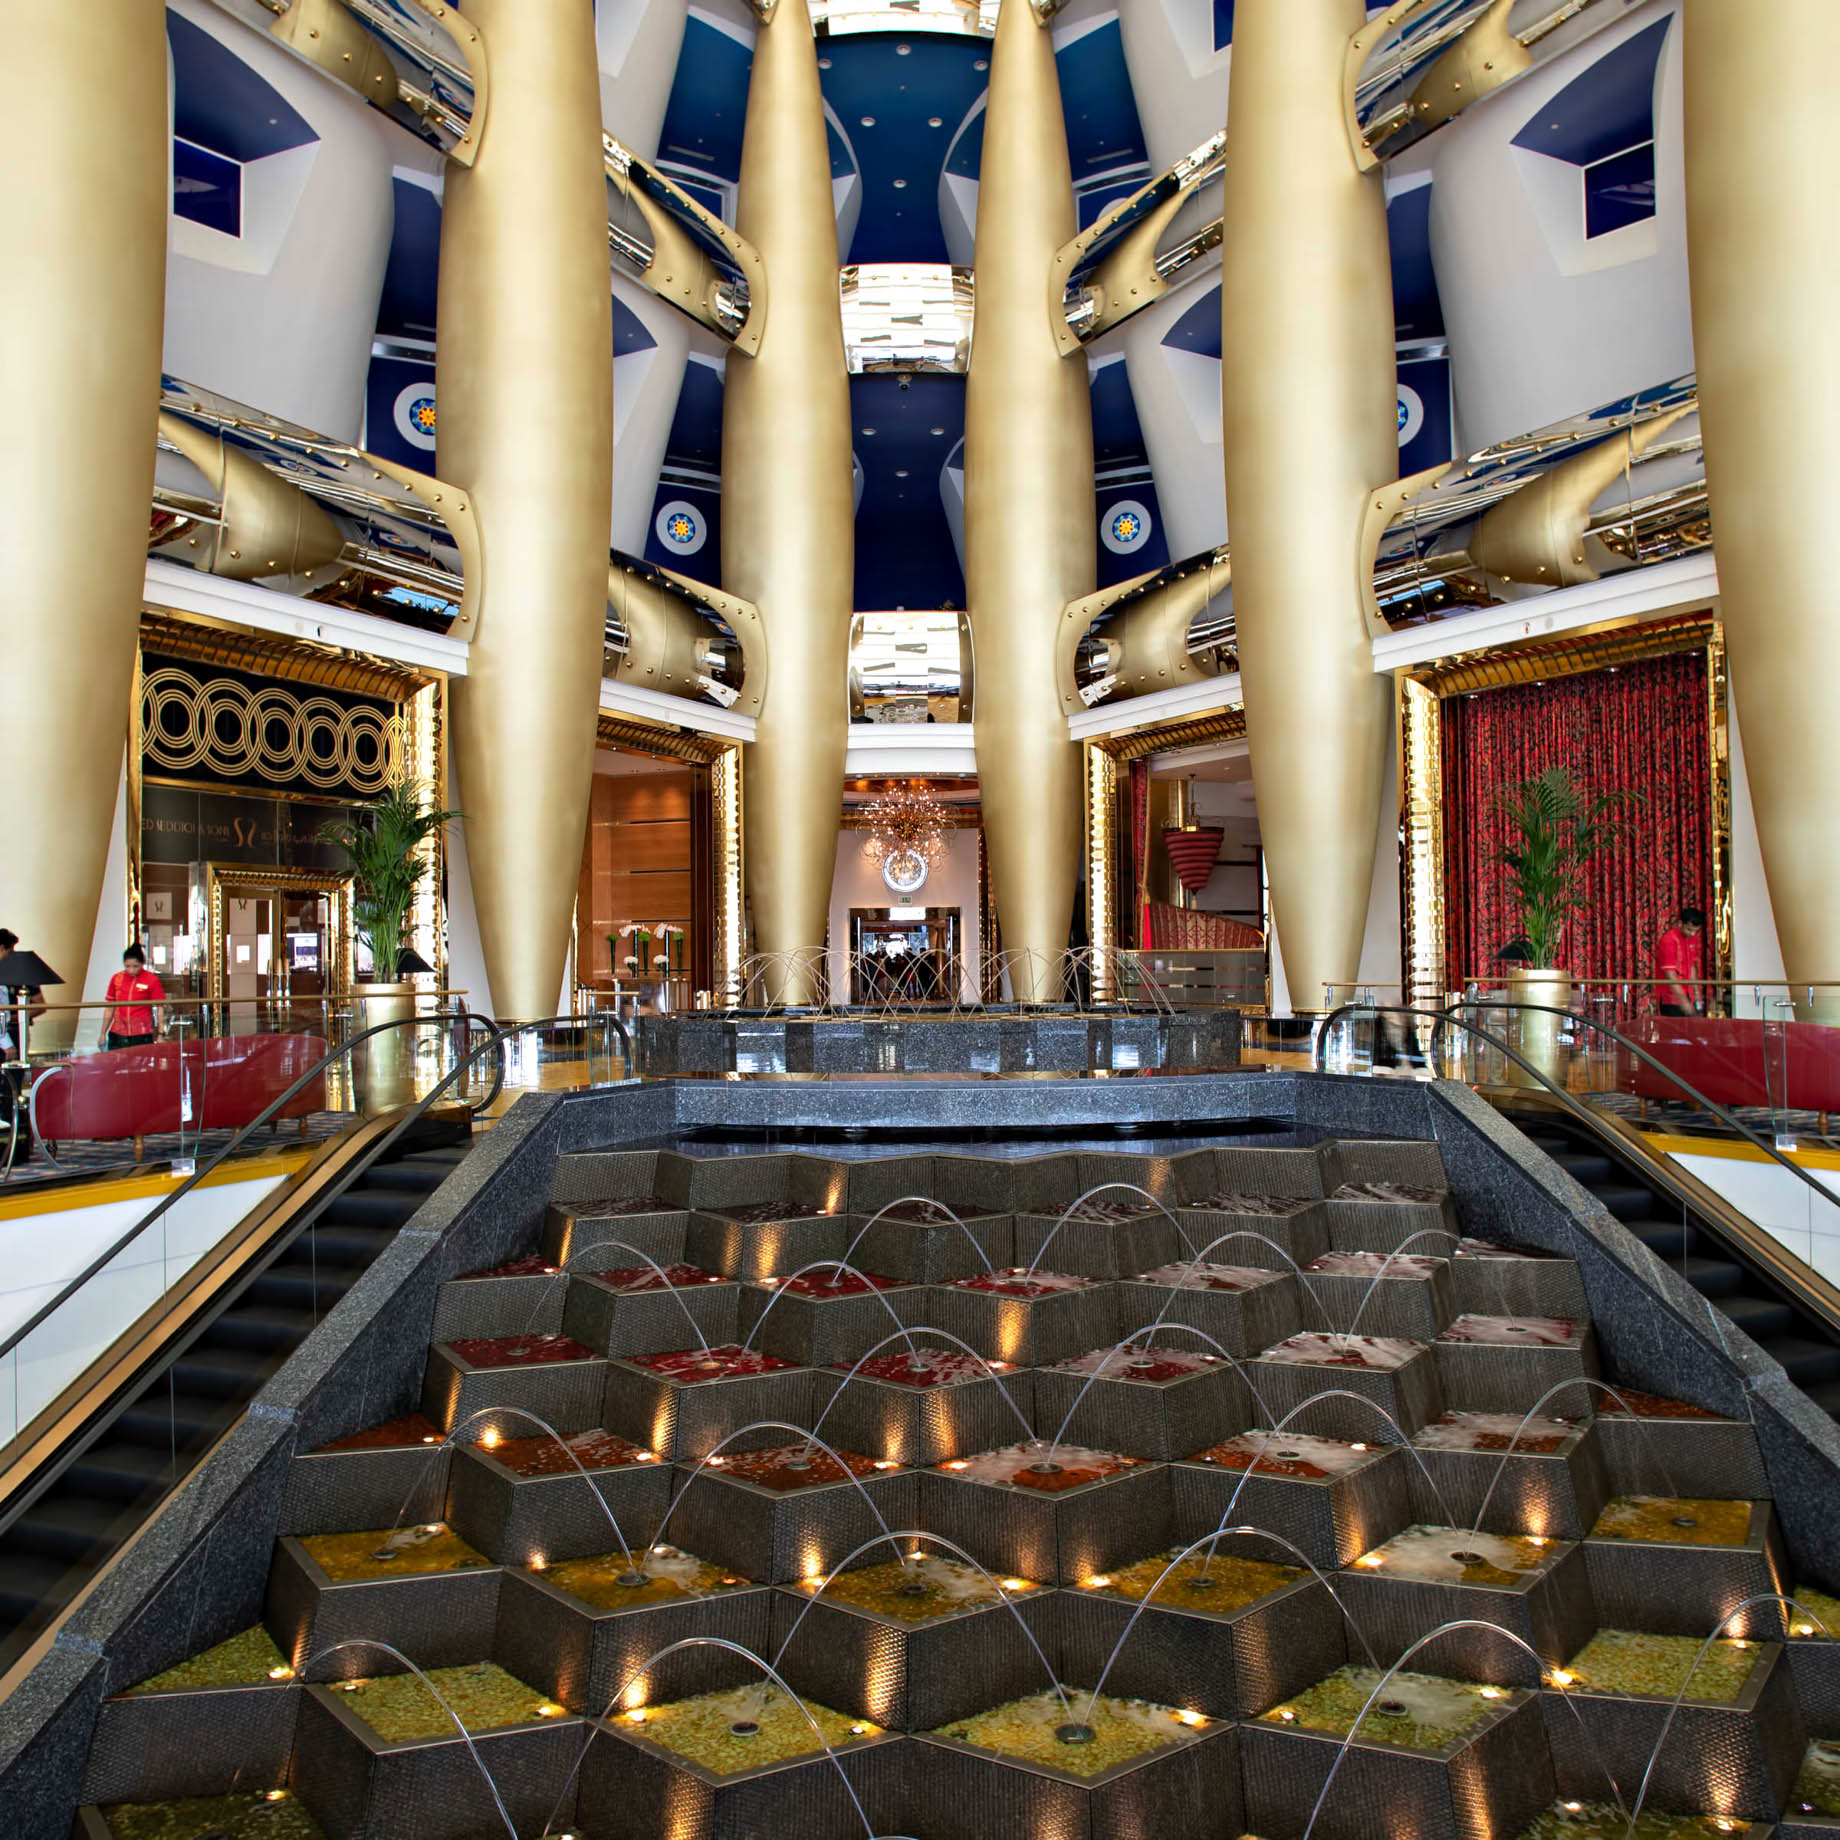 Burj Al Arab Jumeirah Hotel - Dubai, UAE - Lobby Gallery